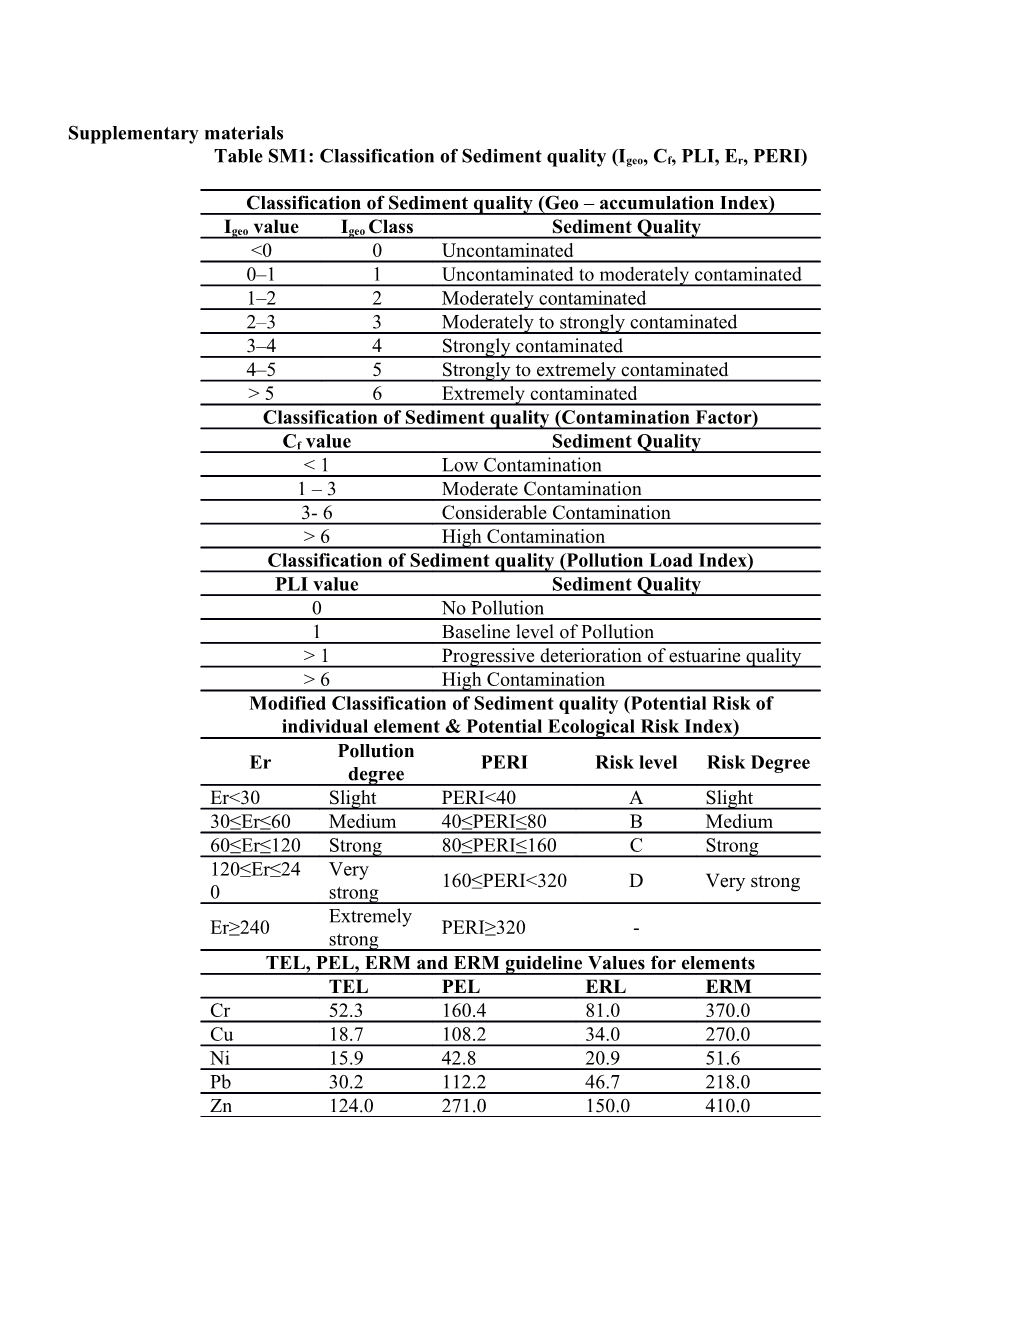 Table SM1: Classification of Sediment Quality (Igeo, Cf, PLI, Er, PERI)